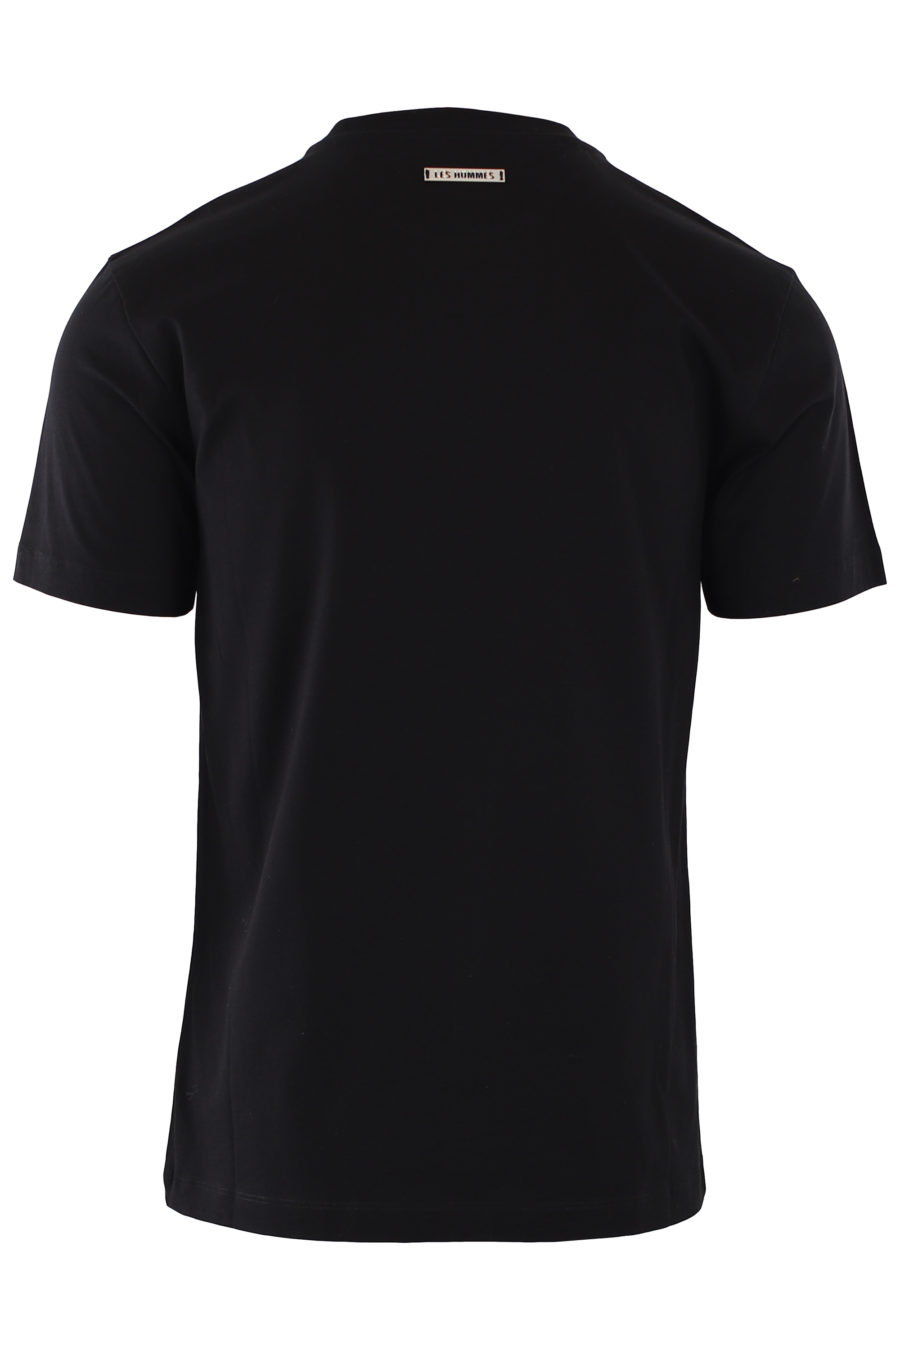 Camiseta negra con logo blanco grande - IMG 1109